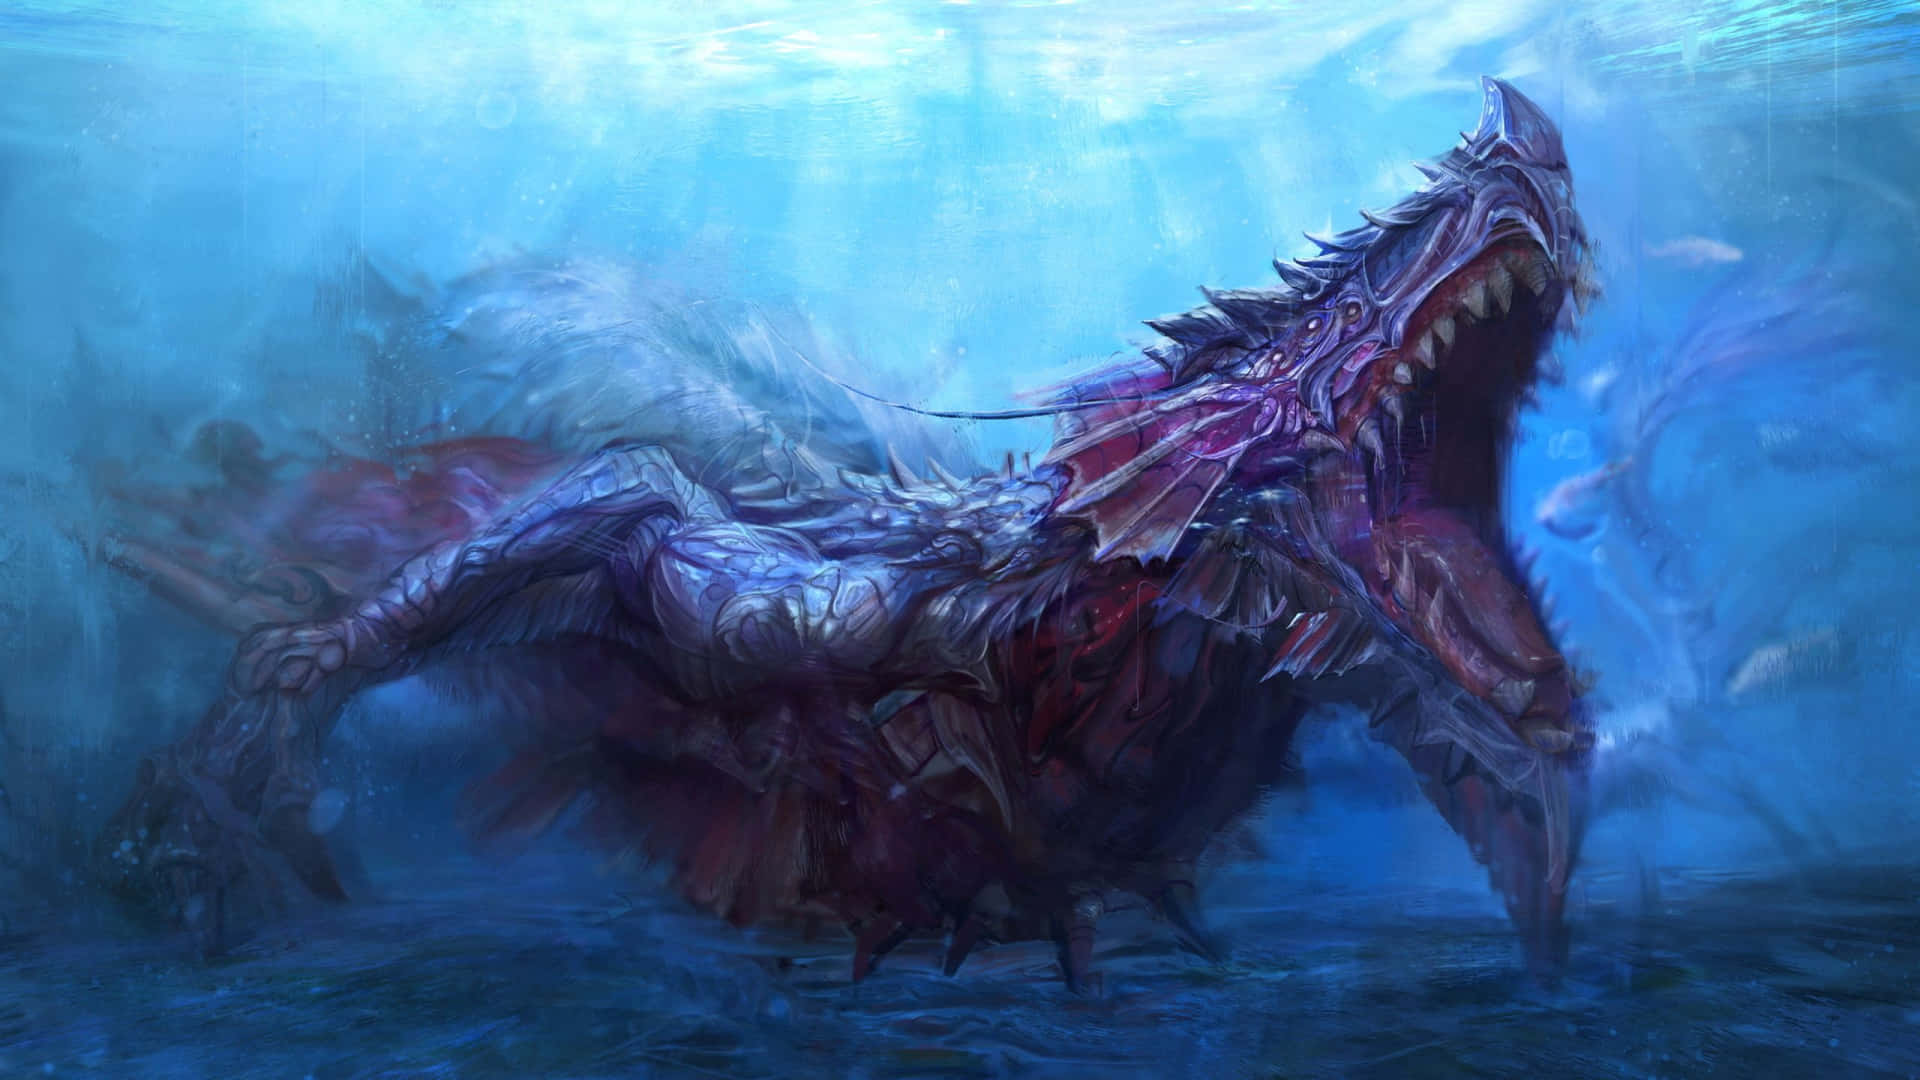 Intense Monster Roars in its Domain Wallpaper